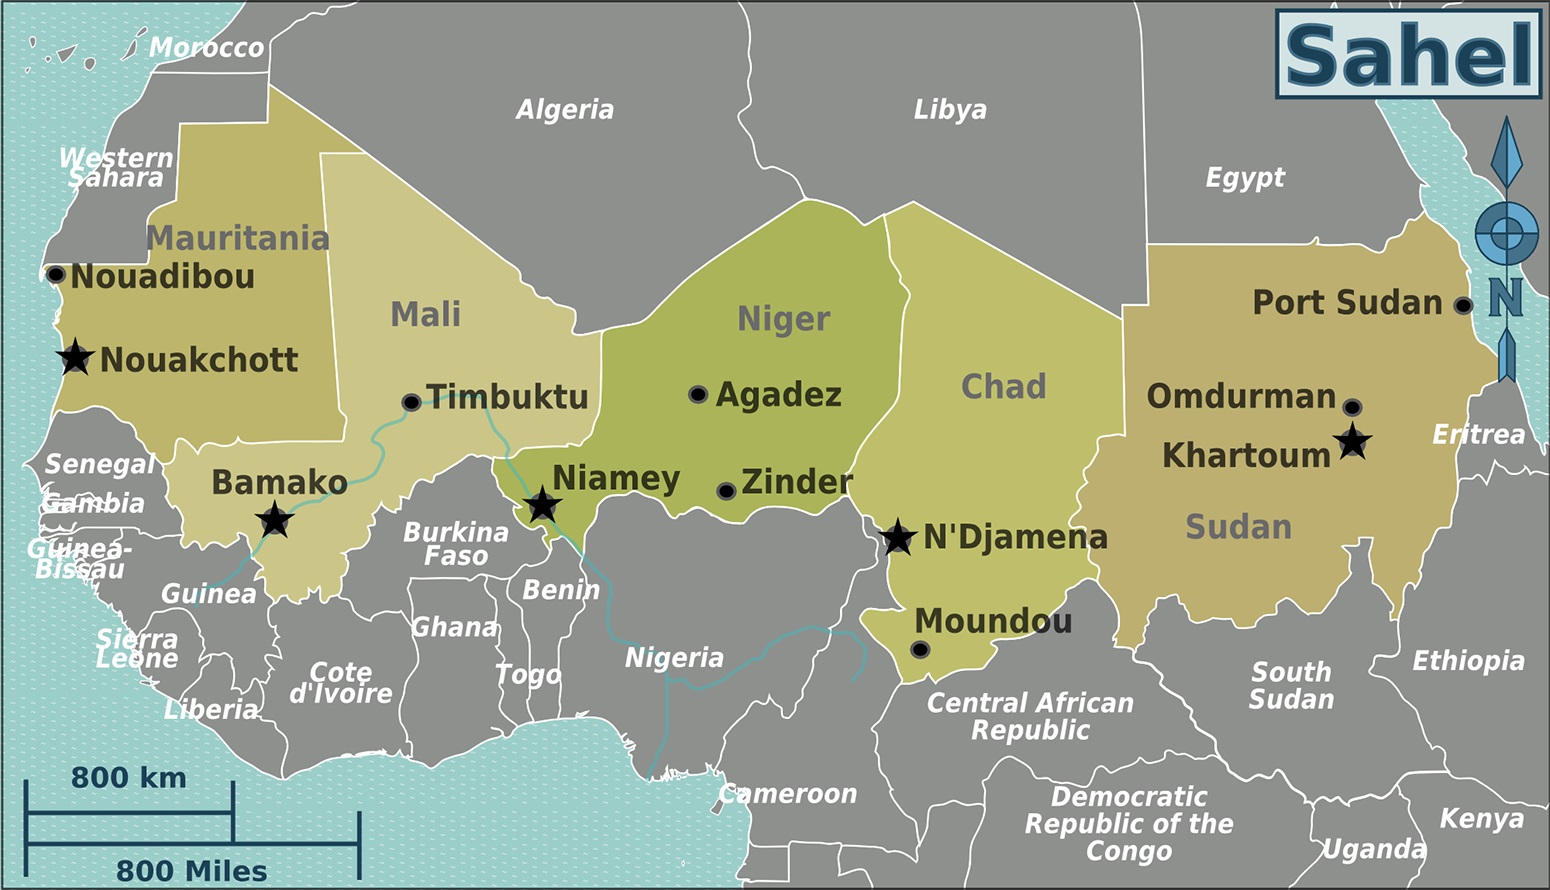 Africa's Sahel Region